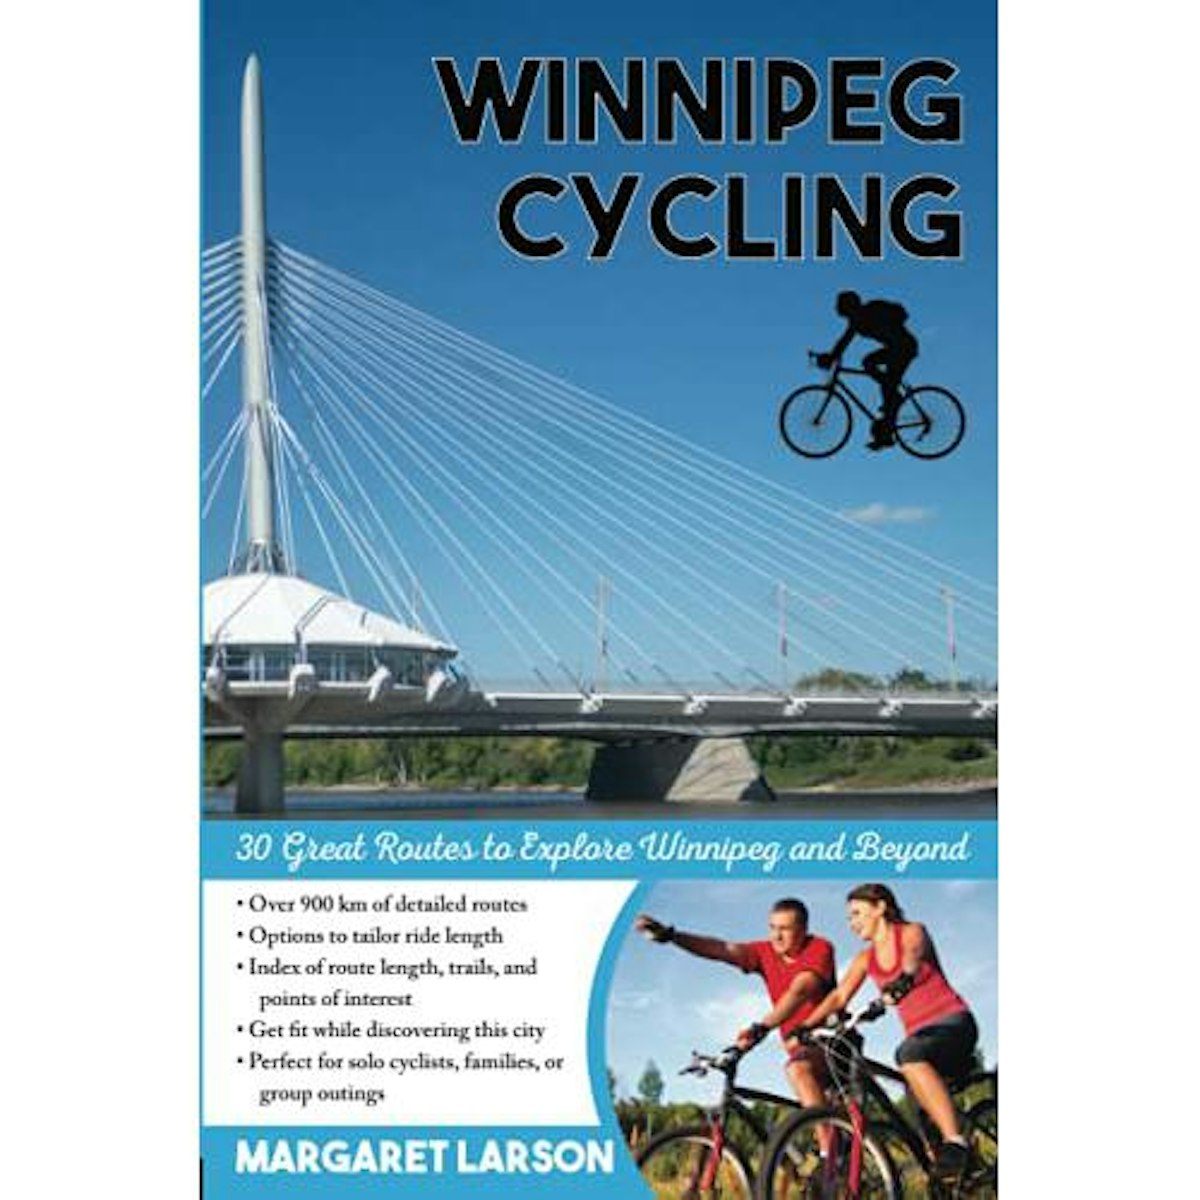 Winnipeg cycling by margaret larson.